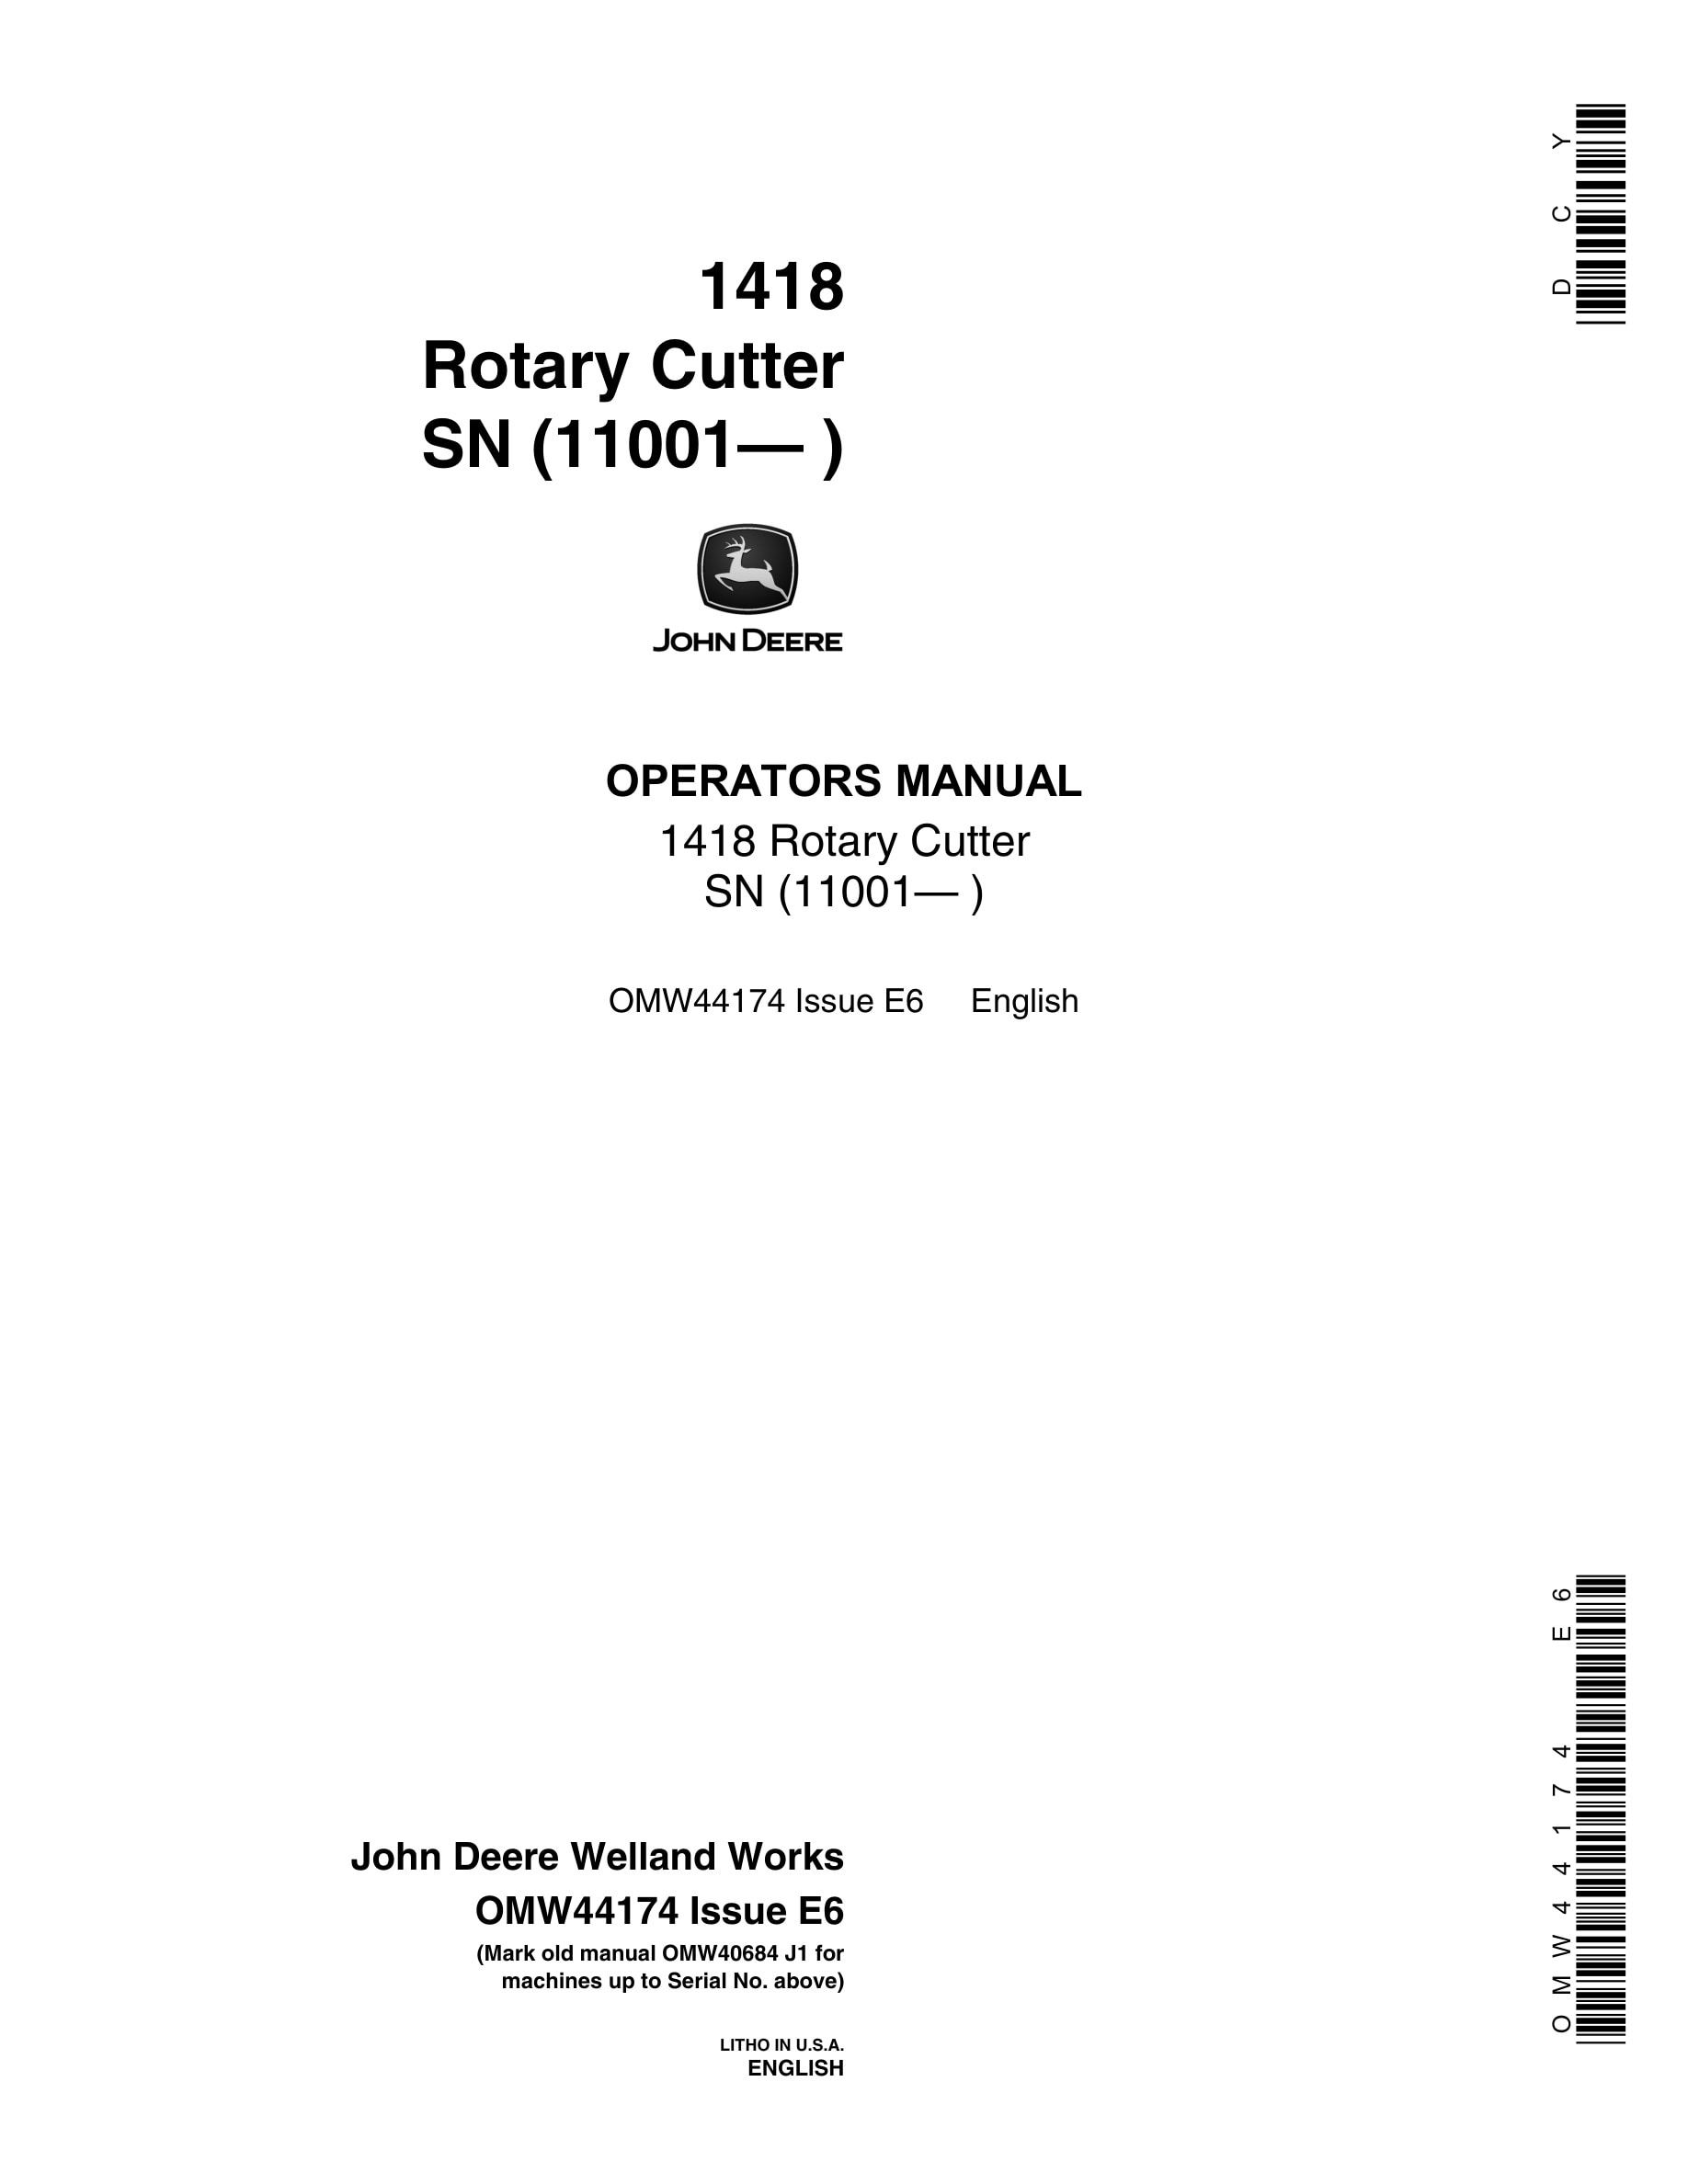 John Deere 1418 Rotary Cutter Operator Manual OMW44174-1